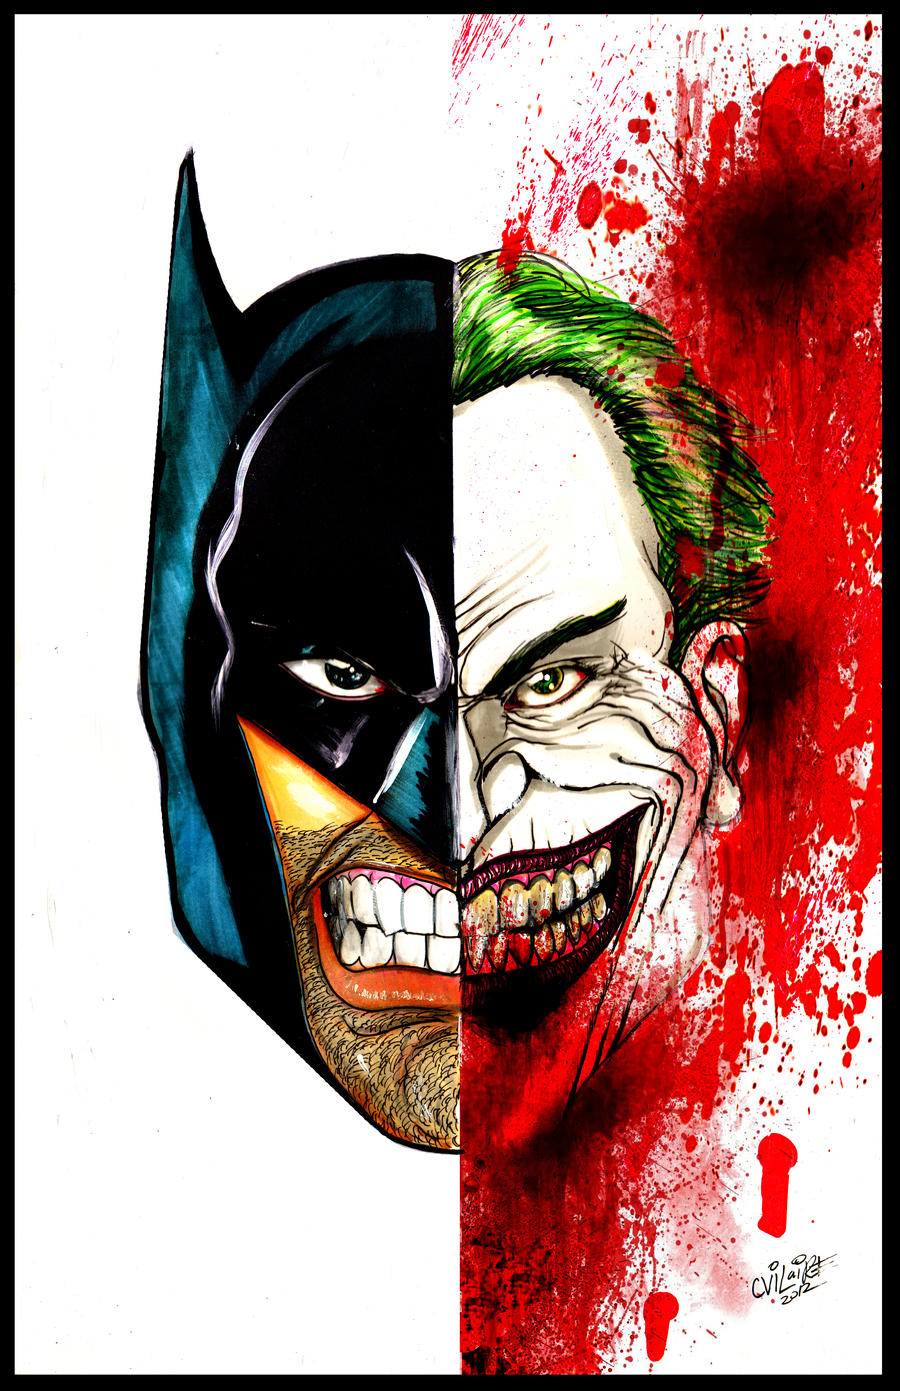 Batman and Joker by cvilaire on deviantART